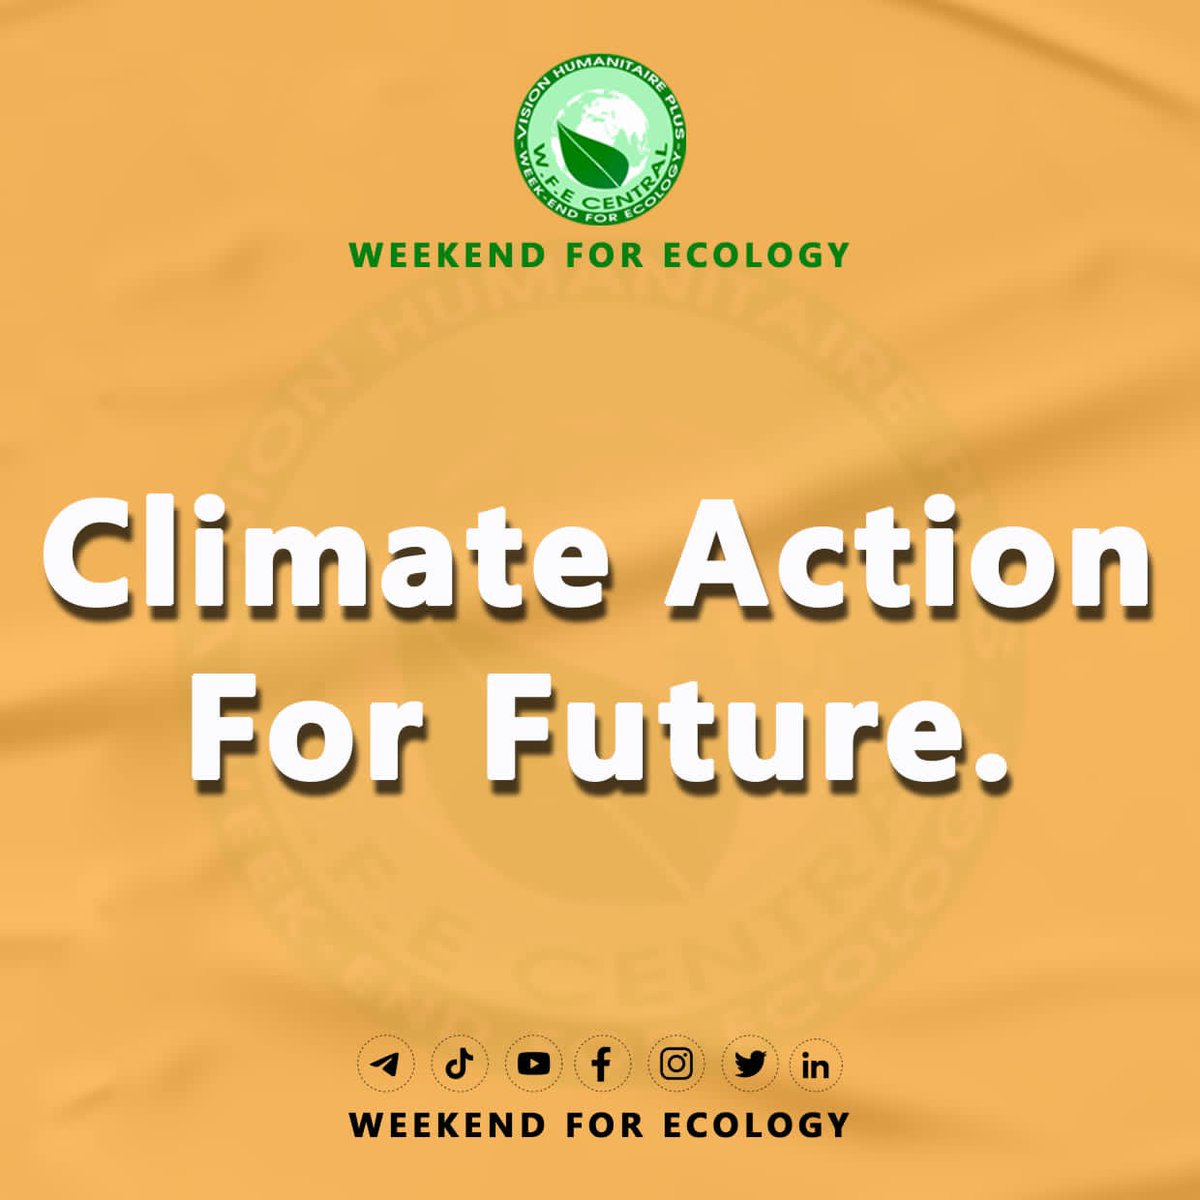 Climate Action For Future.  #WeekendForEcology
#climatestrikeonline  #climateaction                                
#ClimateEmergency
#VisionHumanitairePlus